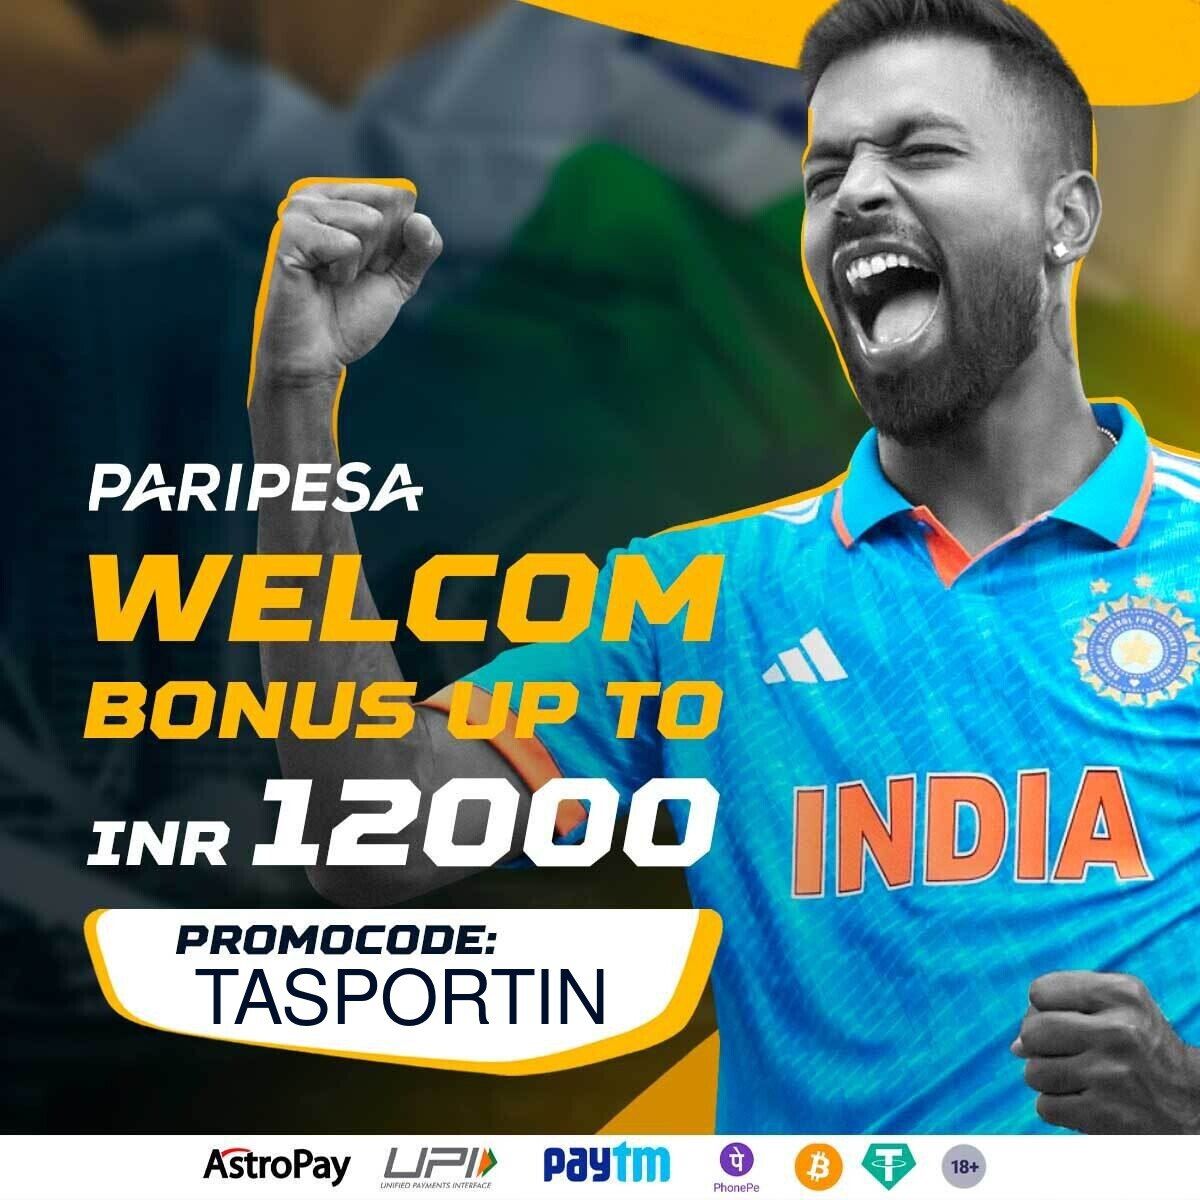 Paripesa India First Deposit Bonus up to 12,000 INR